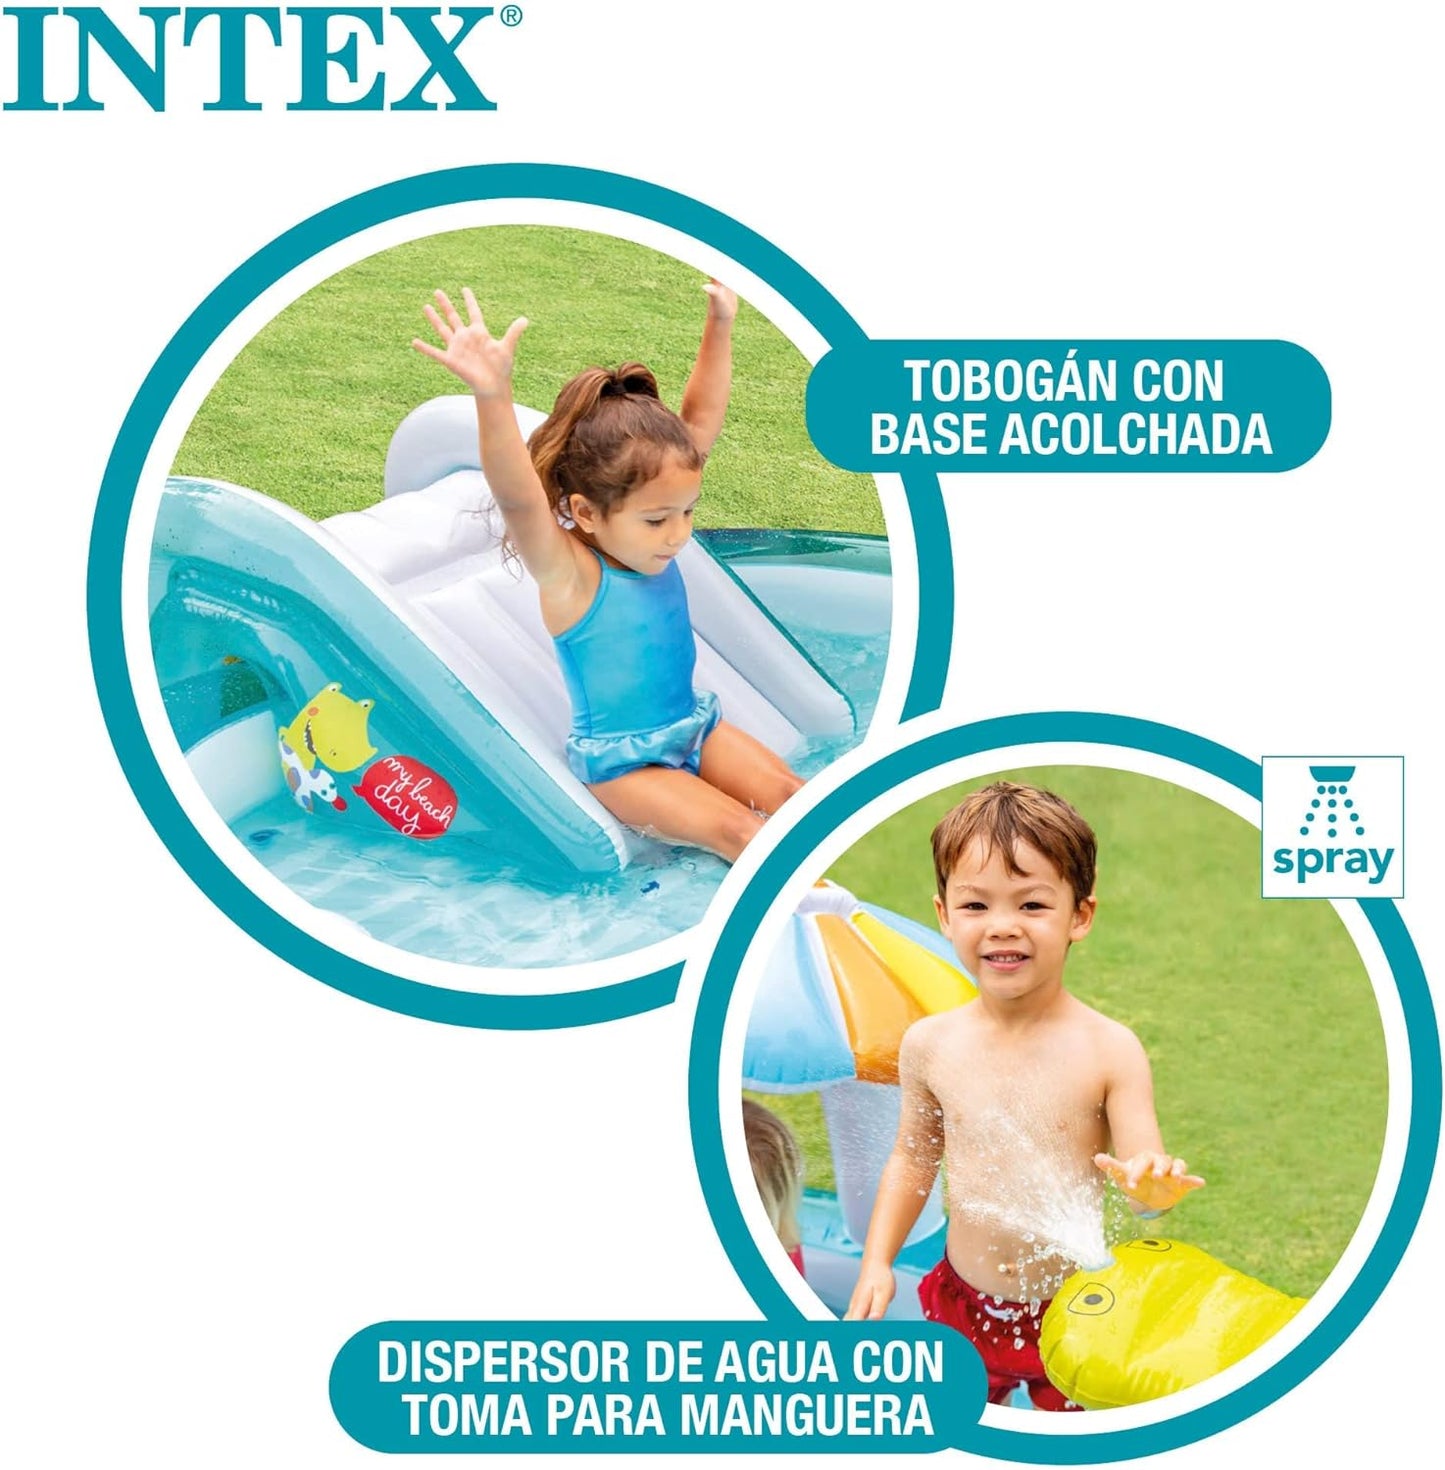 Intex Gator Play Center Inflatable Kiddie Pool Multicolor